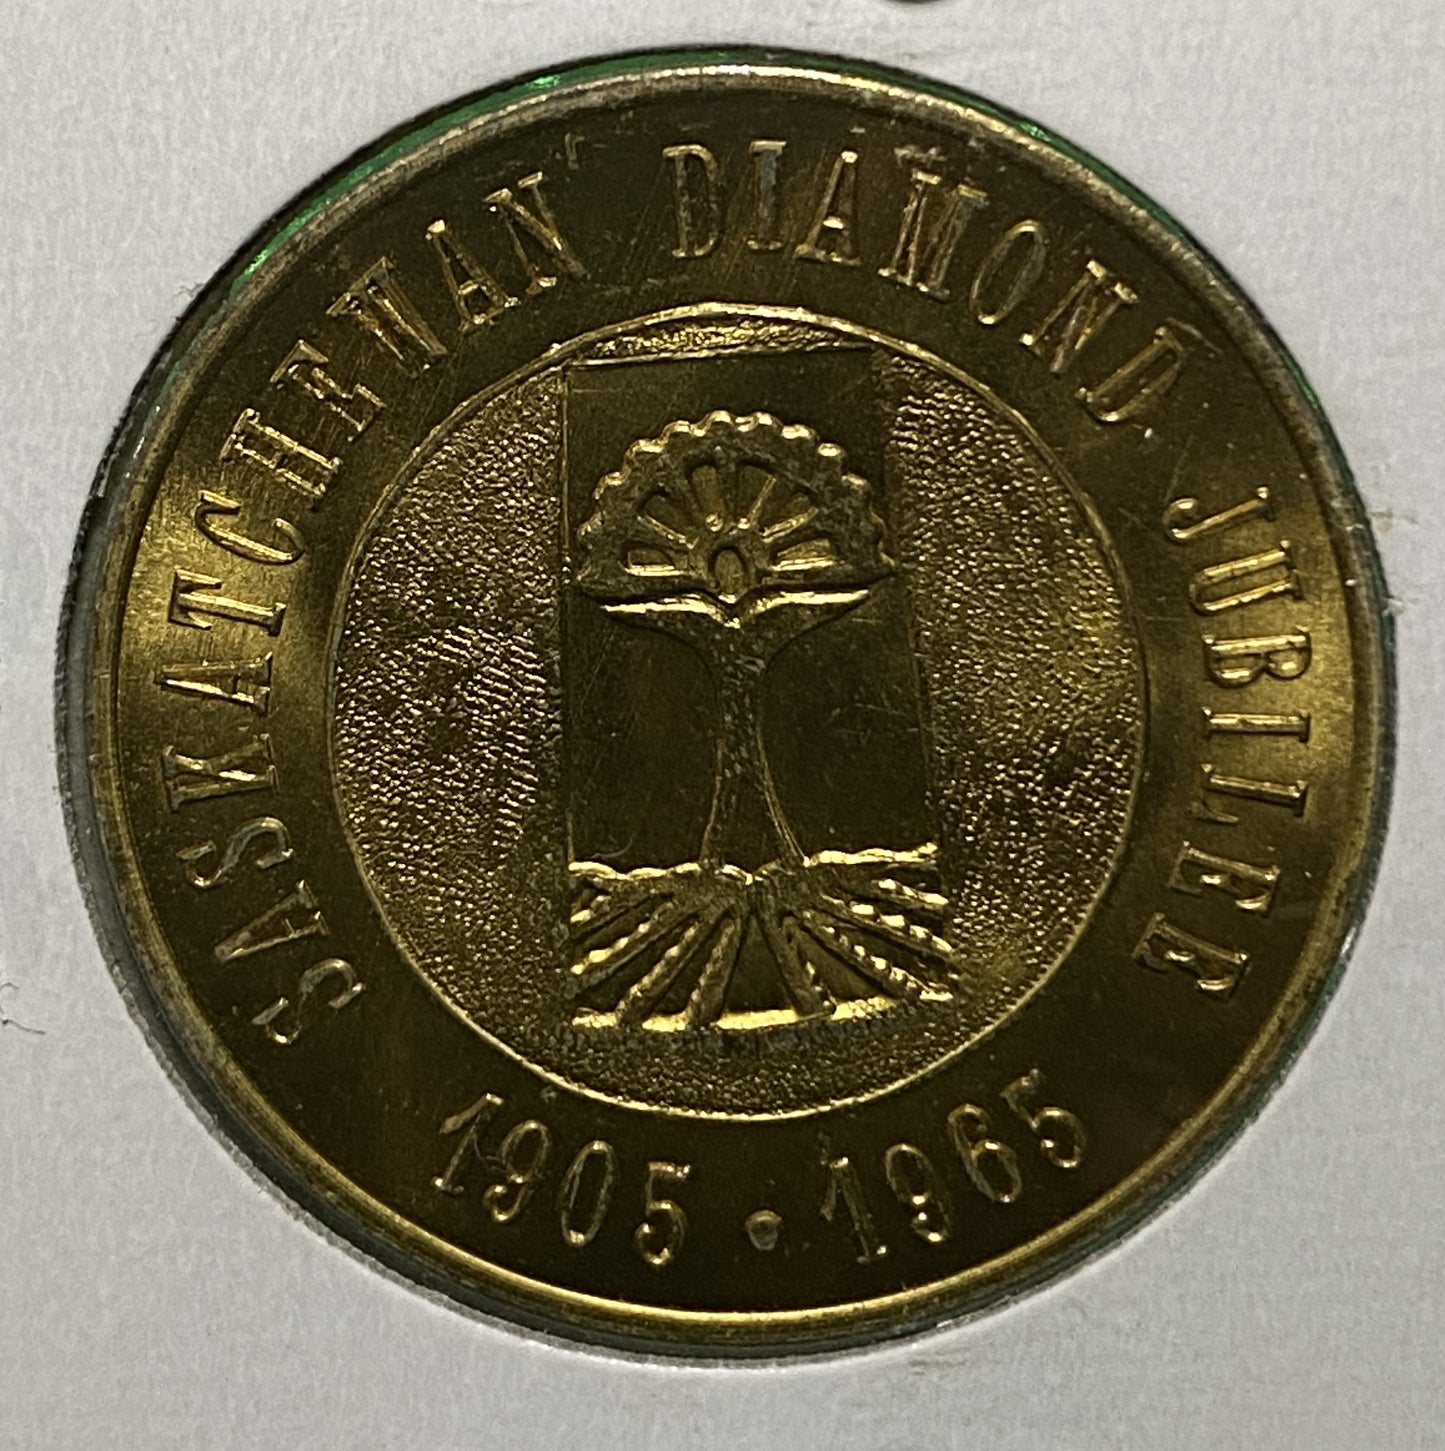 SASKATCHEWAN DIAMOND JUBILEE RCMP TOKEN COIN VF/VF+ CANADA 1905 - 1965